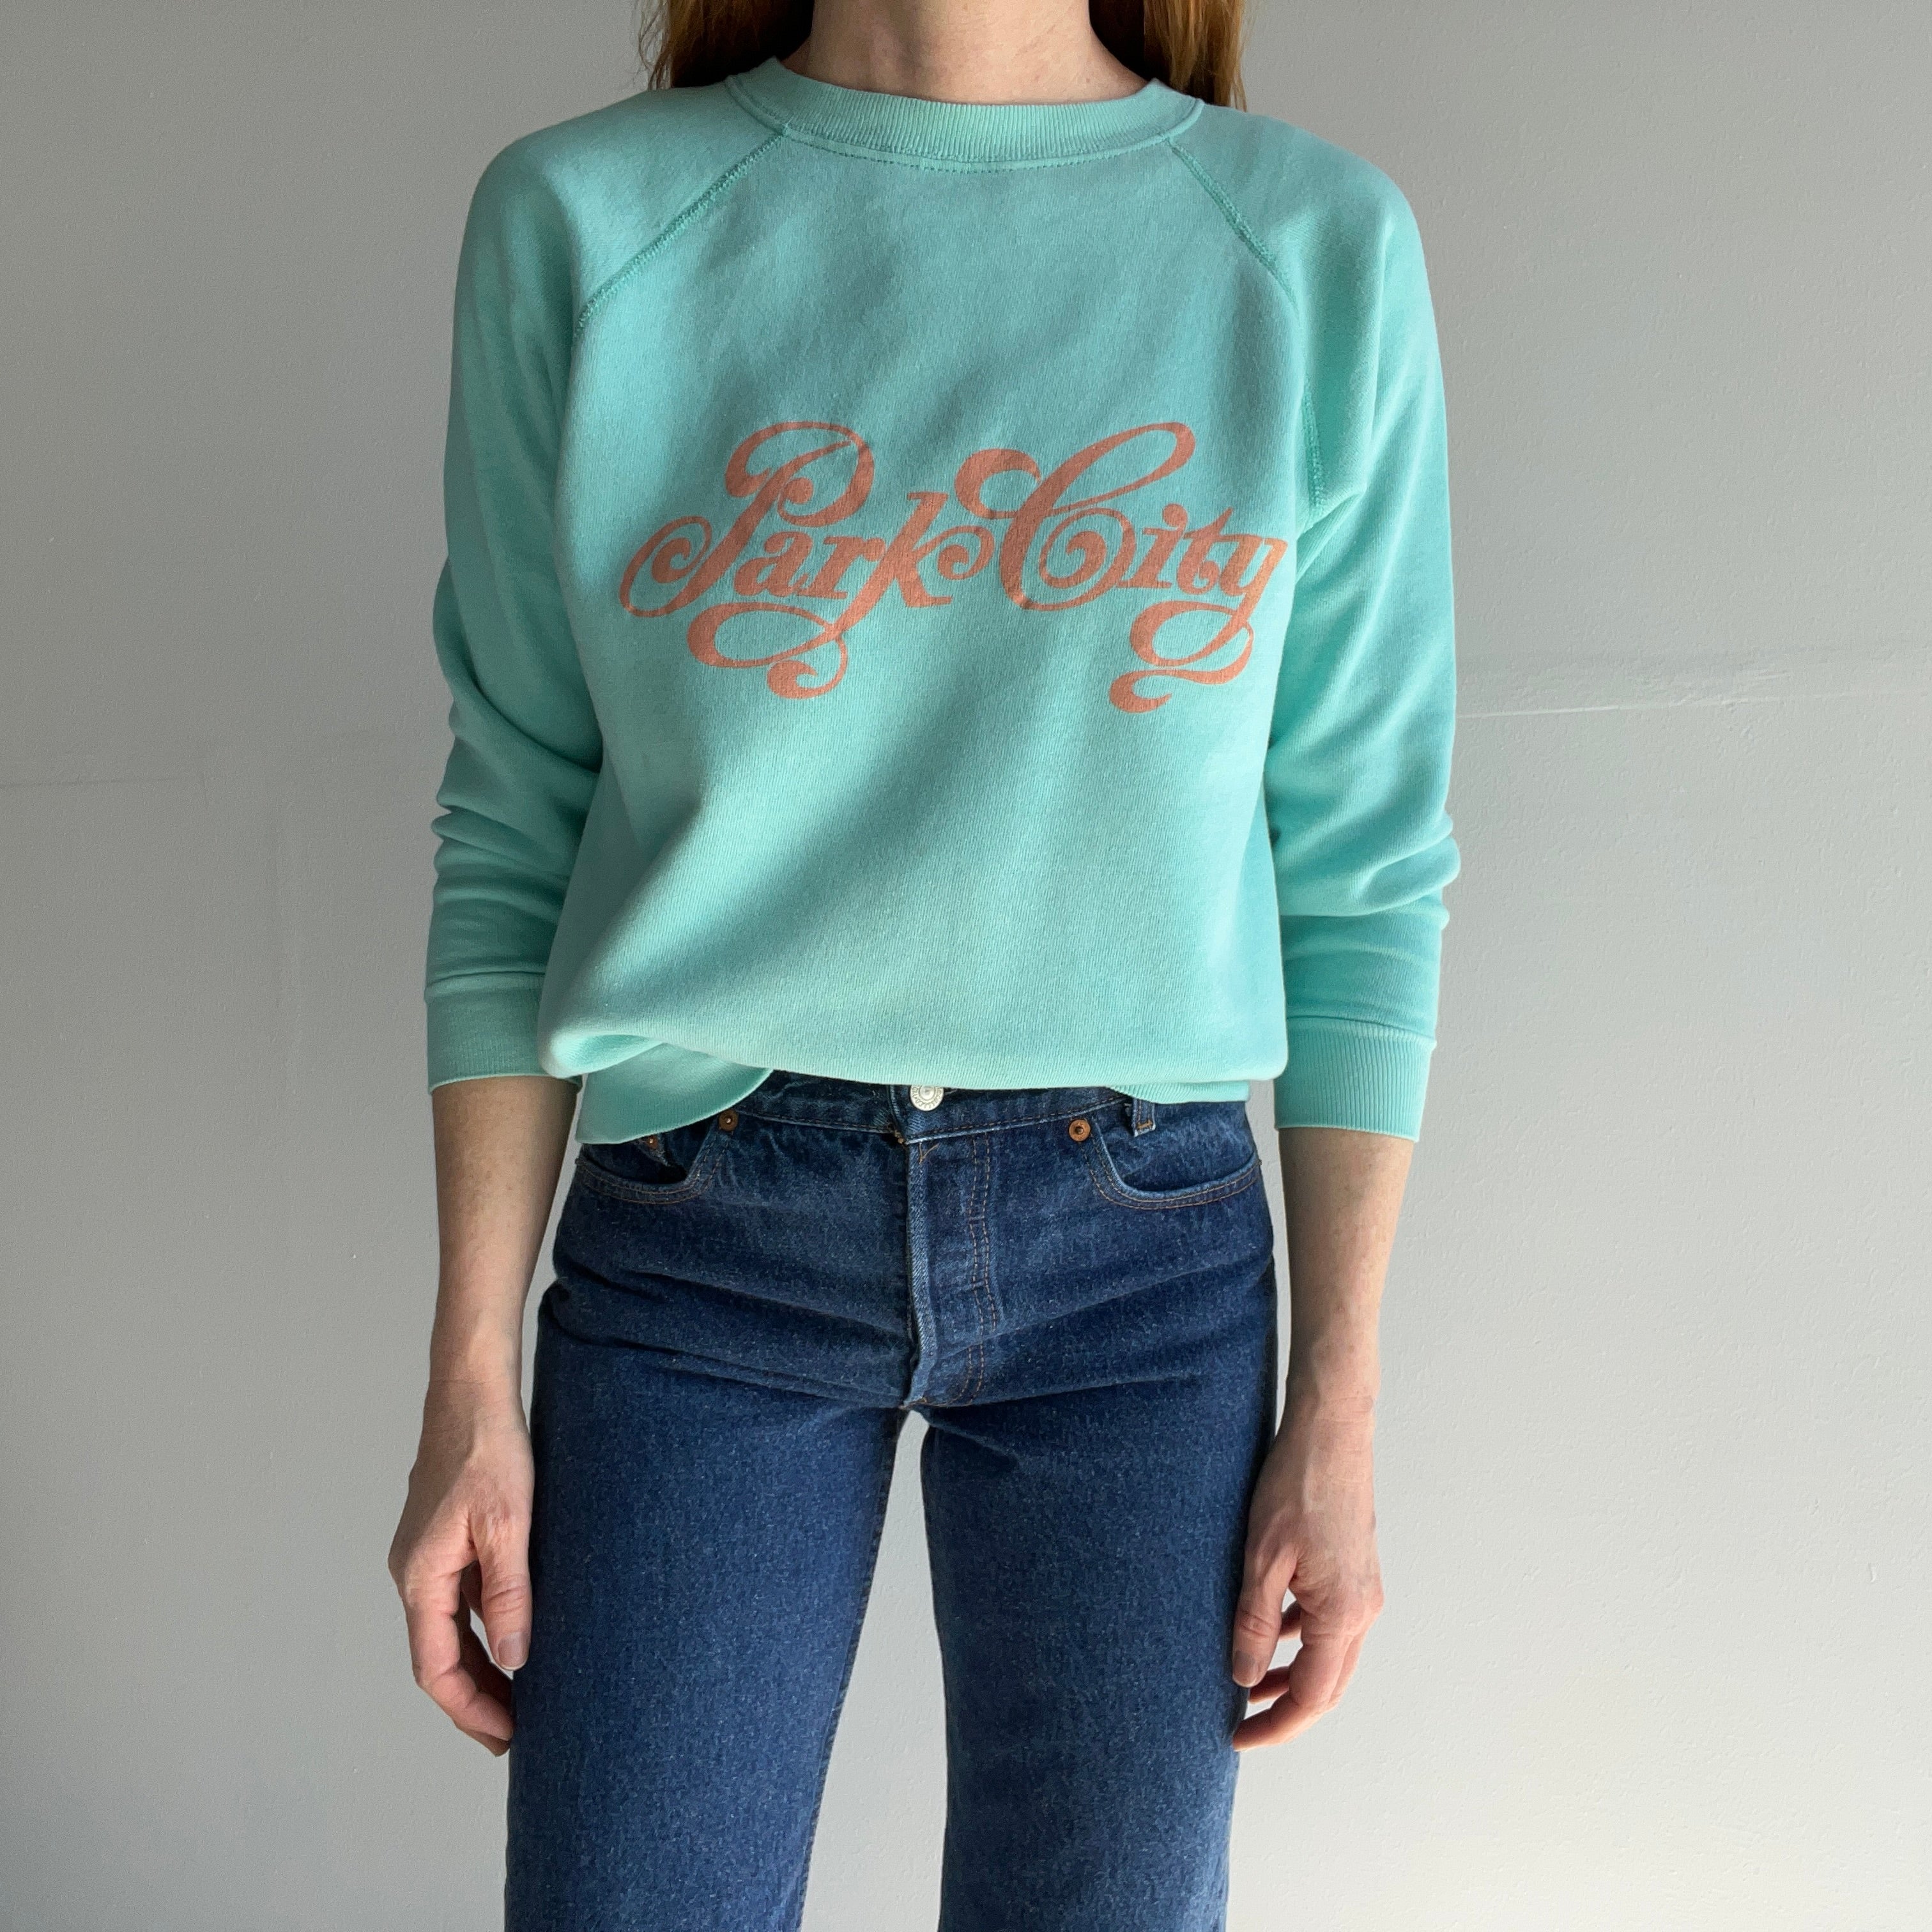 1980s Park City Sweatshirt by Tultex